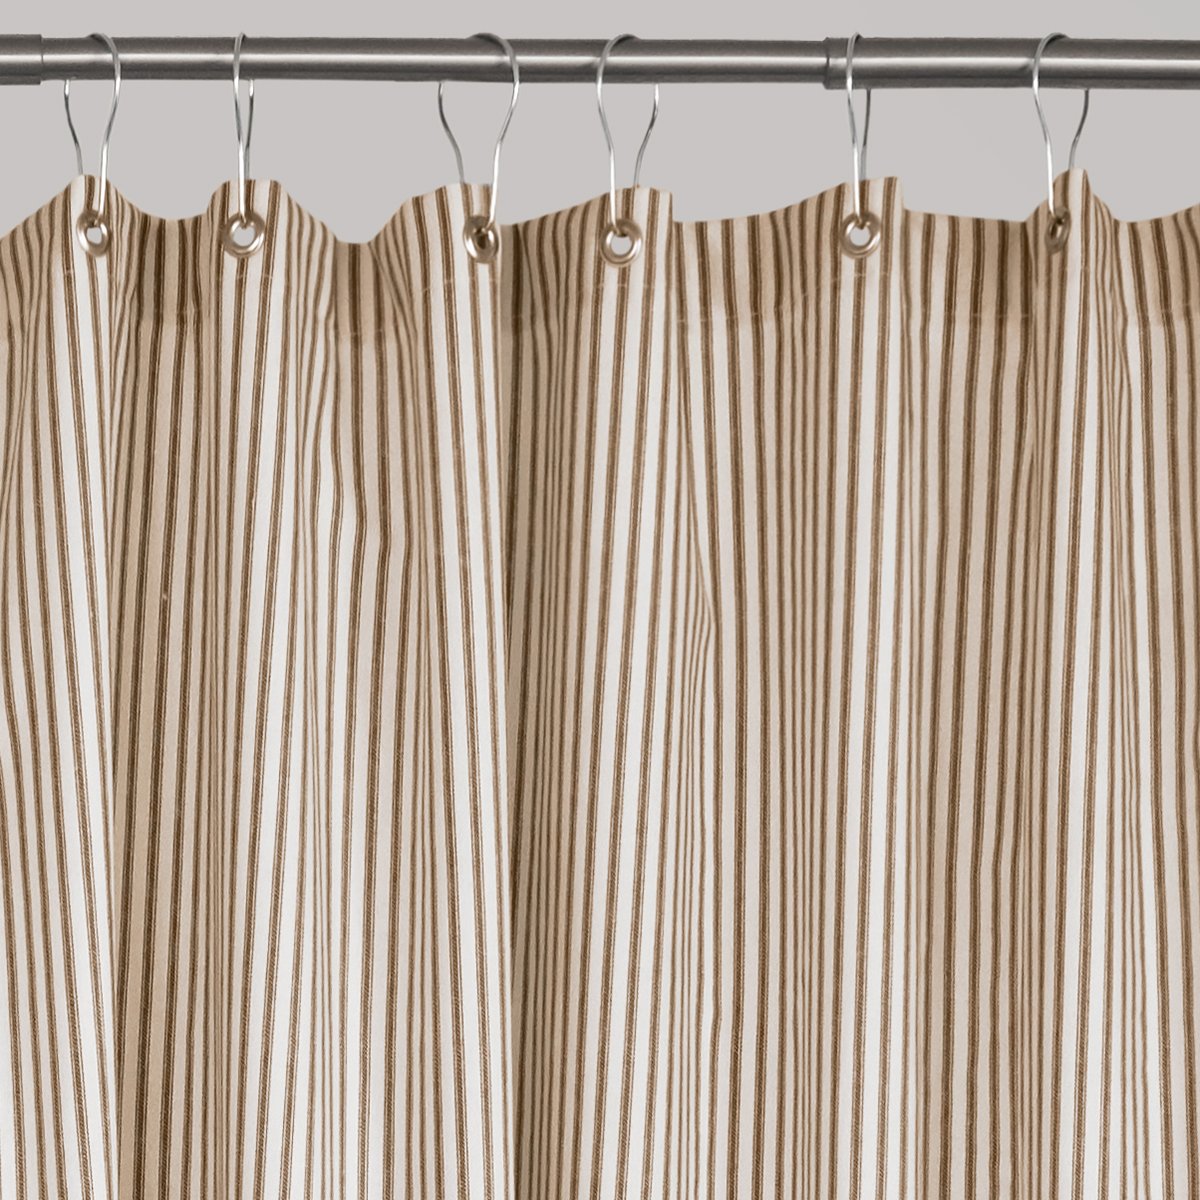 Ticking Stripe Shower Curtain Black, Brown, Grey, Navy, Red  72x72 or custom size